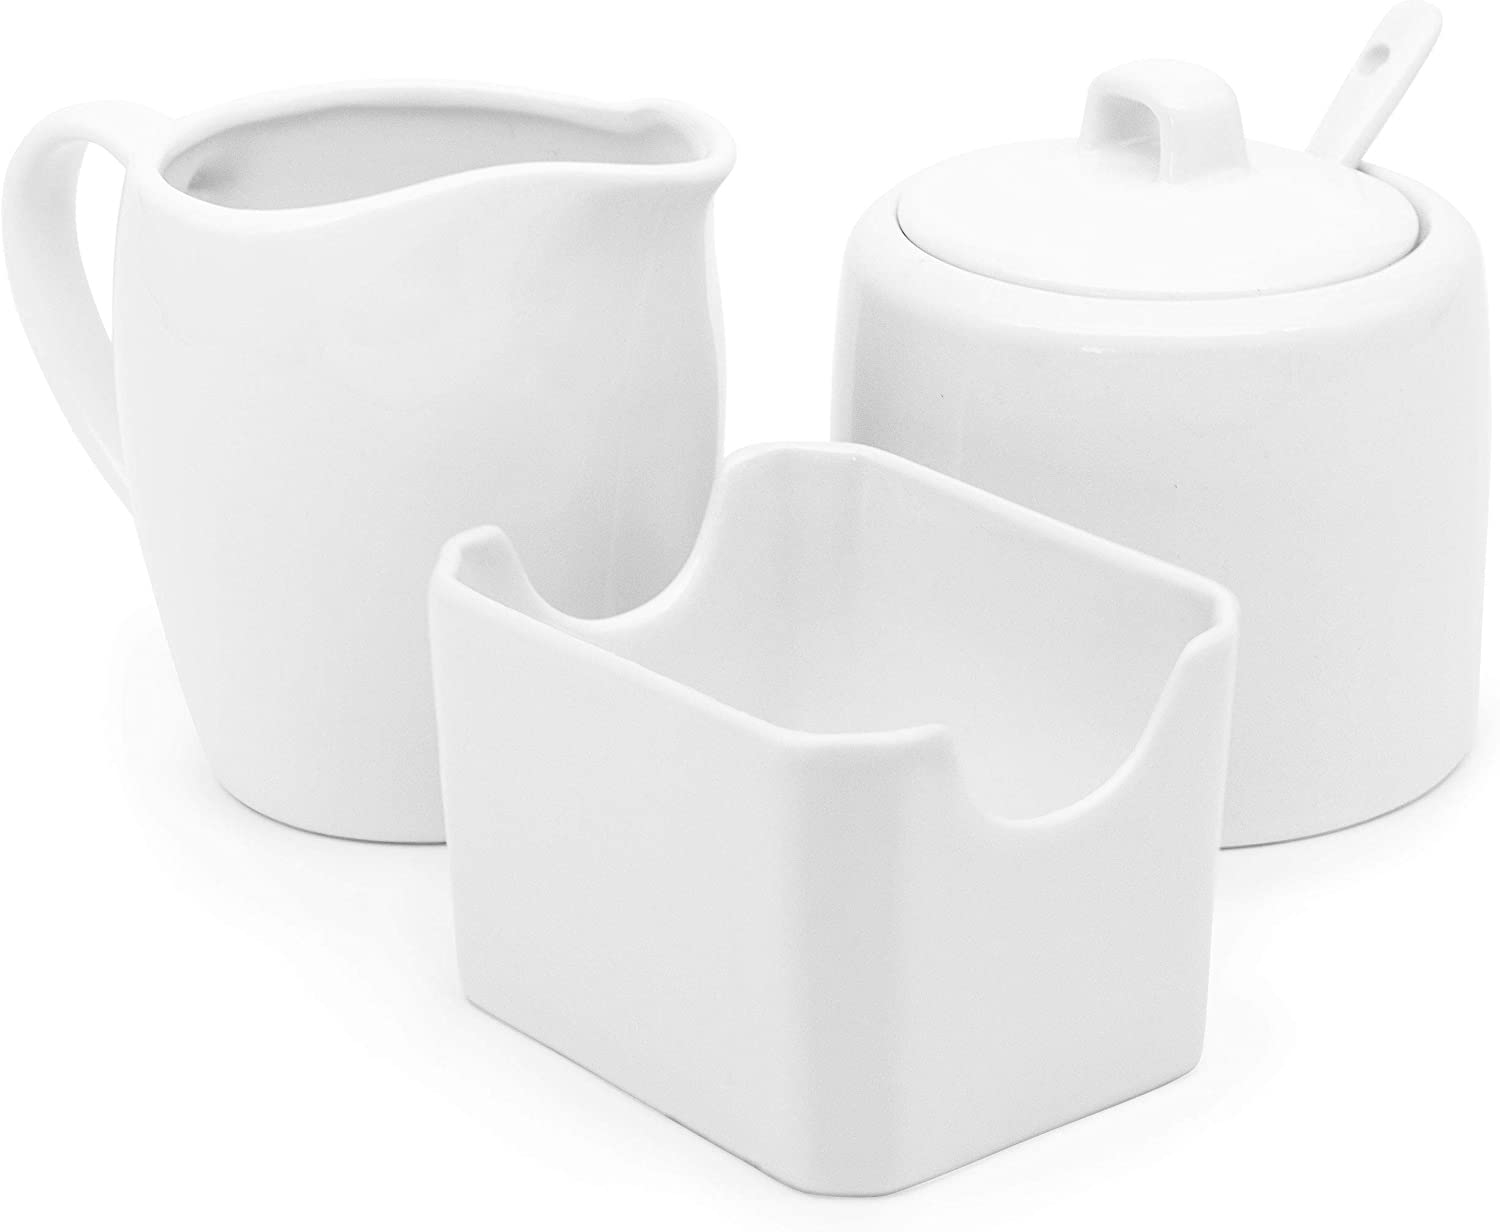 Kook Dishwasher Safe Ceramic Sugar And Creamer Set, 3-Piece